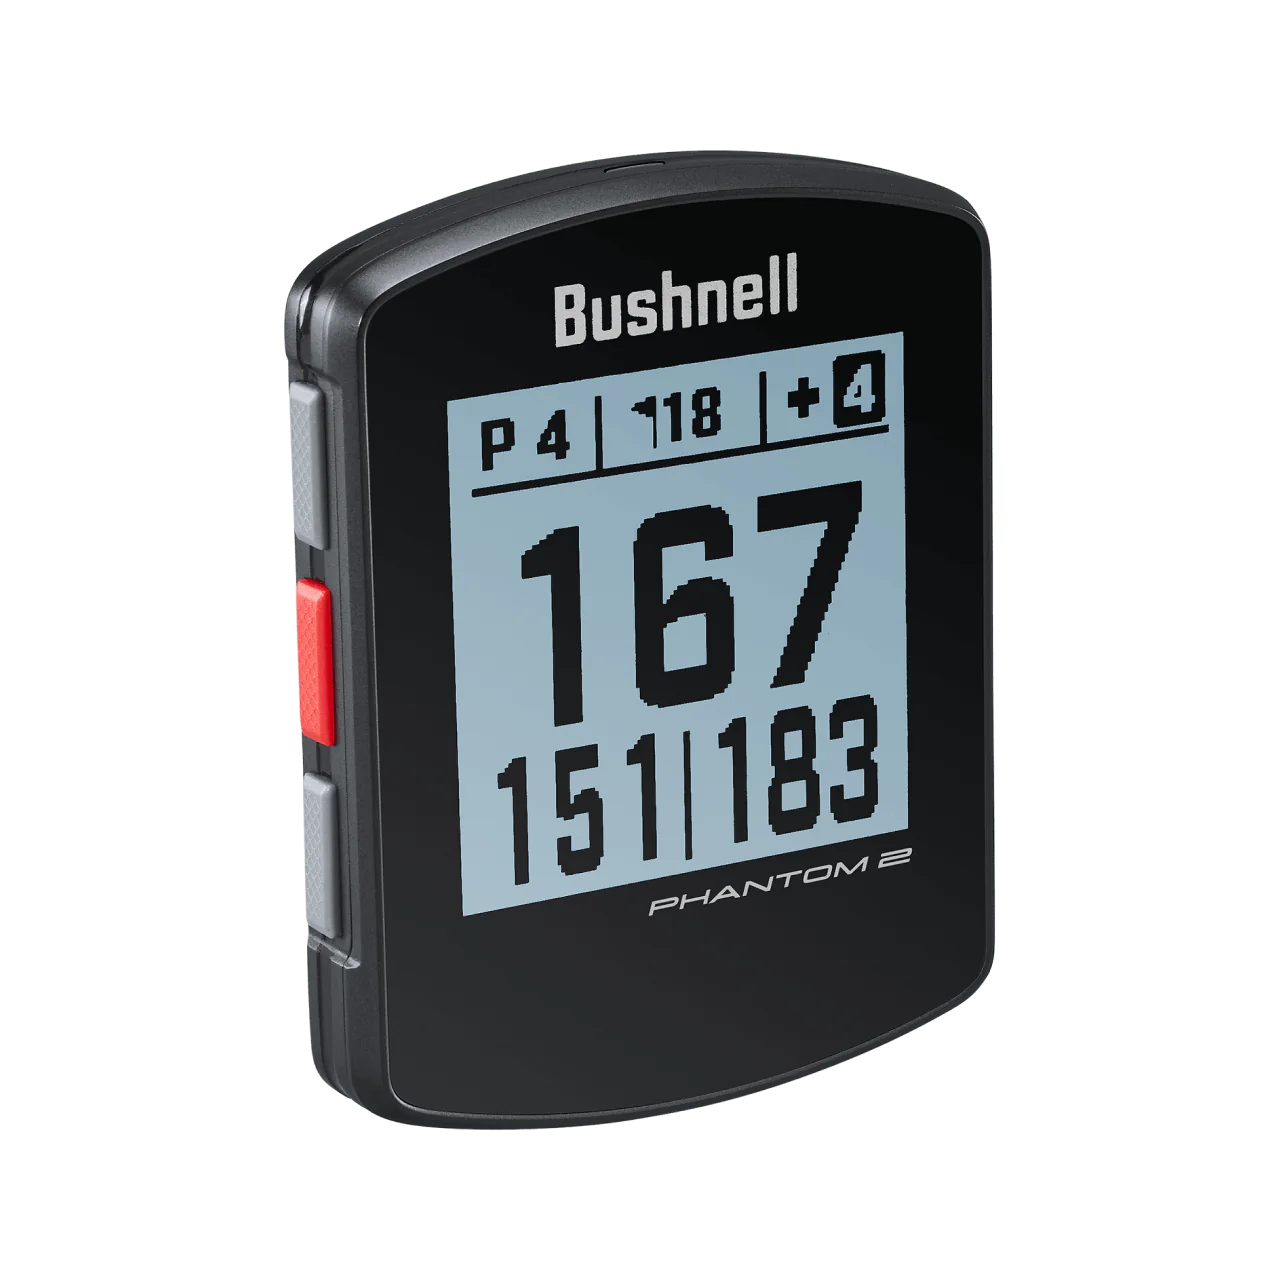 Bushnell Phantom 2 Handheld Golf GPS